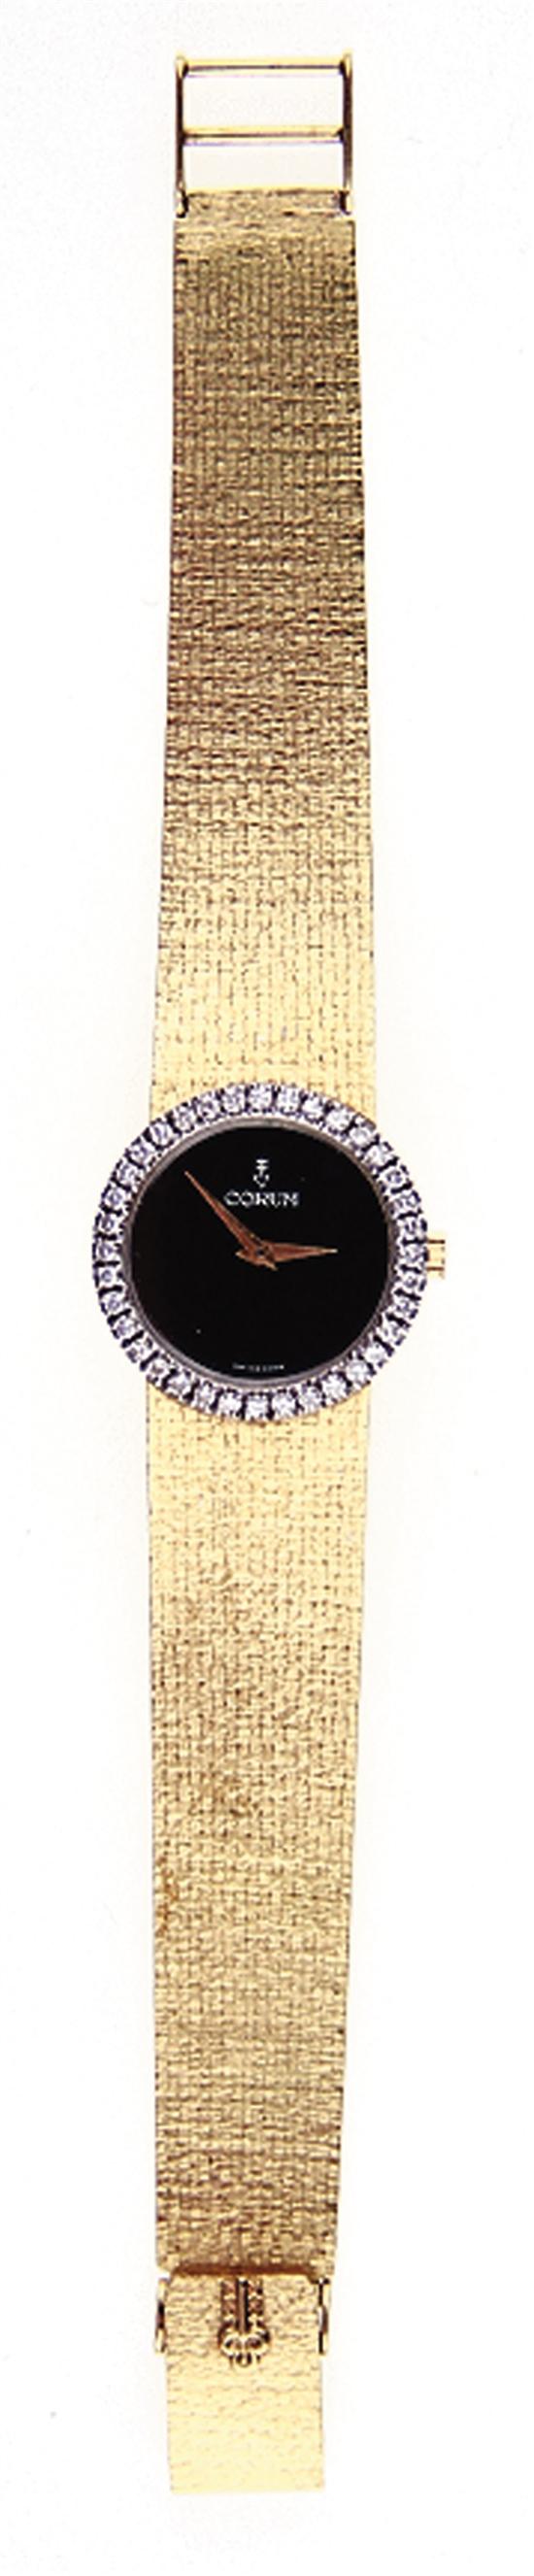 Corum gold lady s wristwatch 17 1393ff